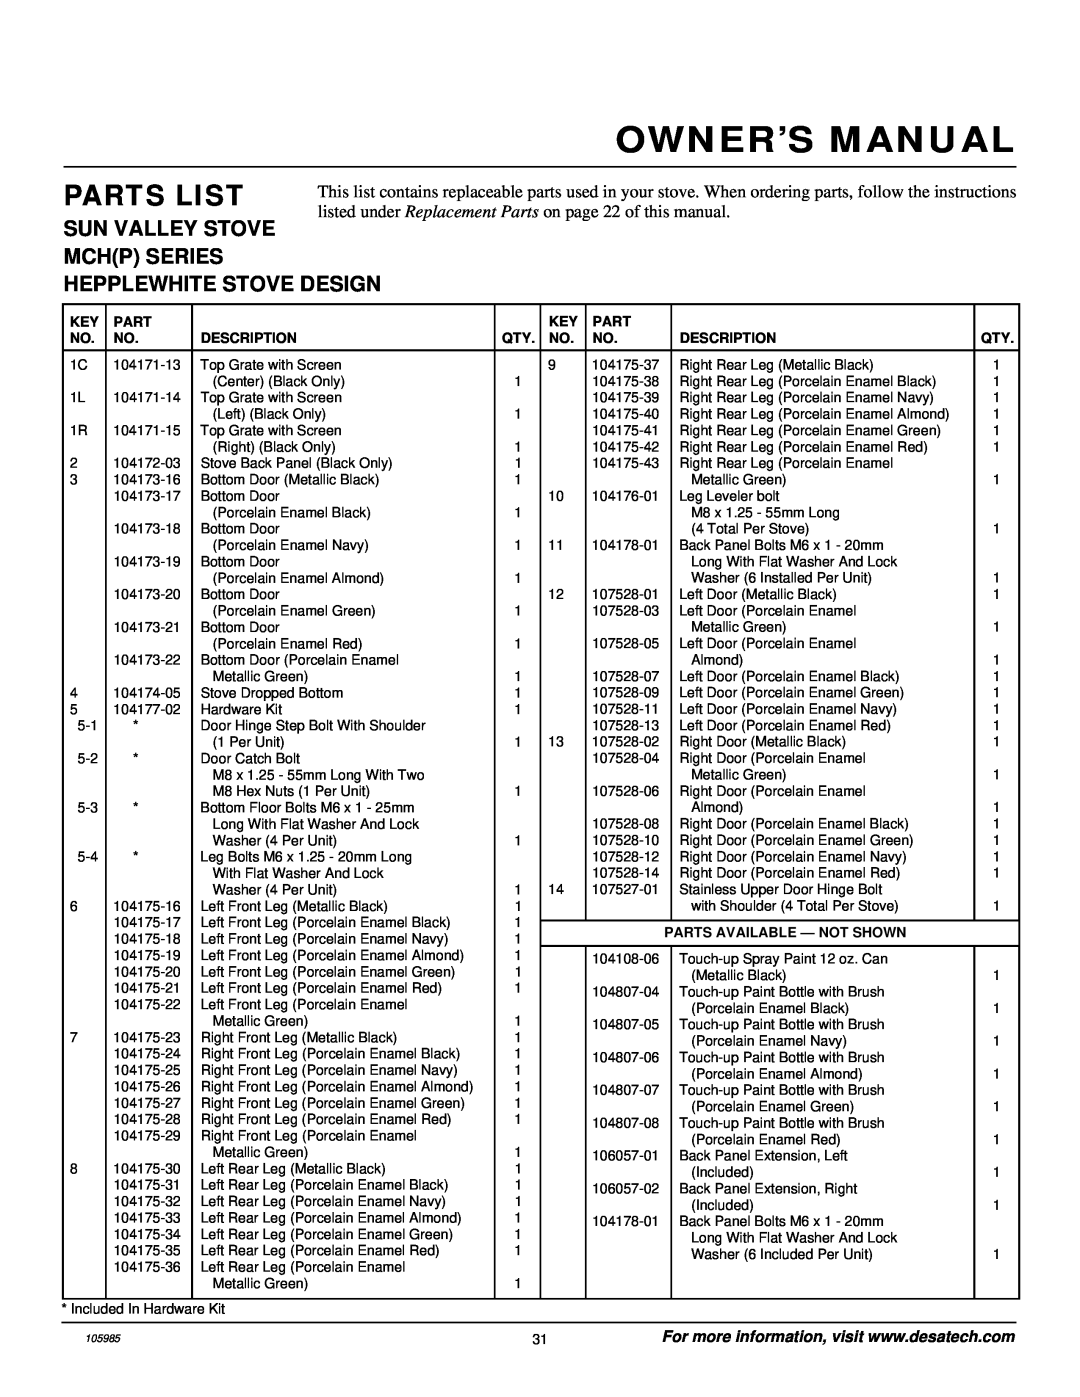 Desa MSVFBNR Series Sun Valley Stove Mchp Series, Hepplewhite Stove Design, Owner’S Manual, Parts List, Description 